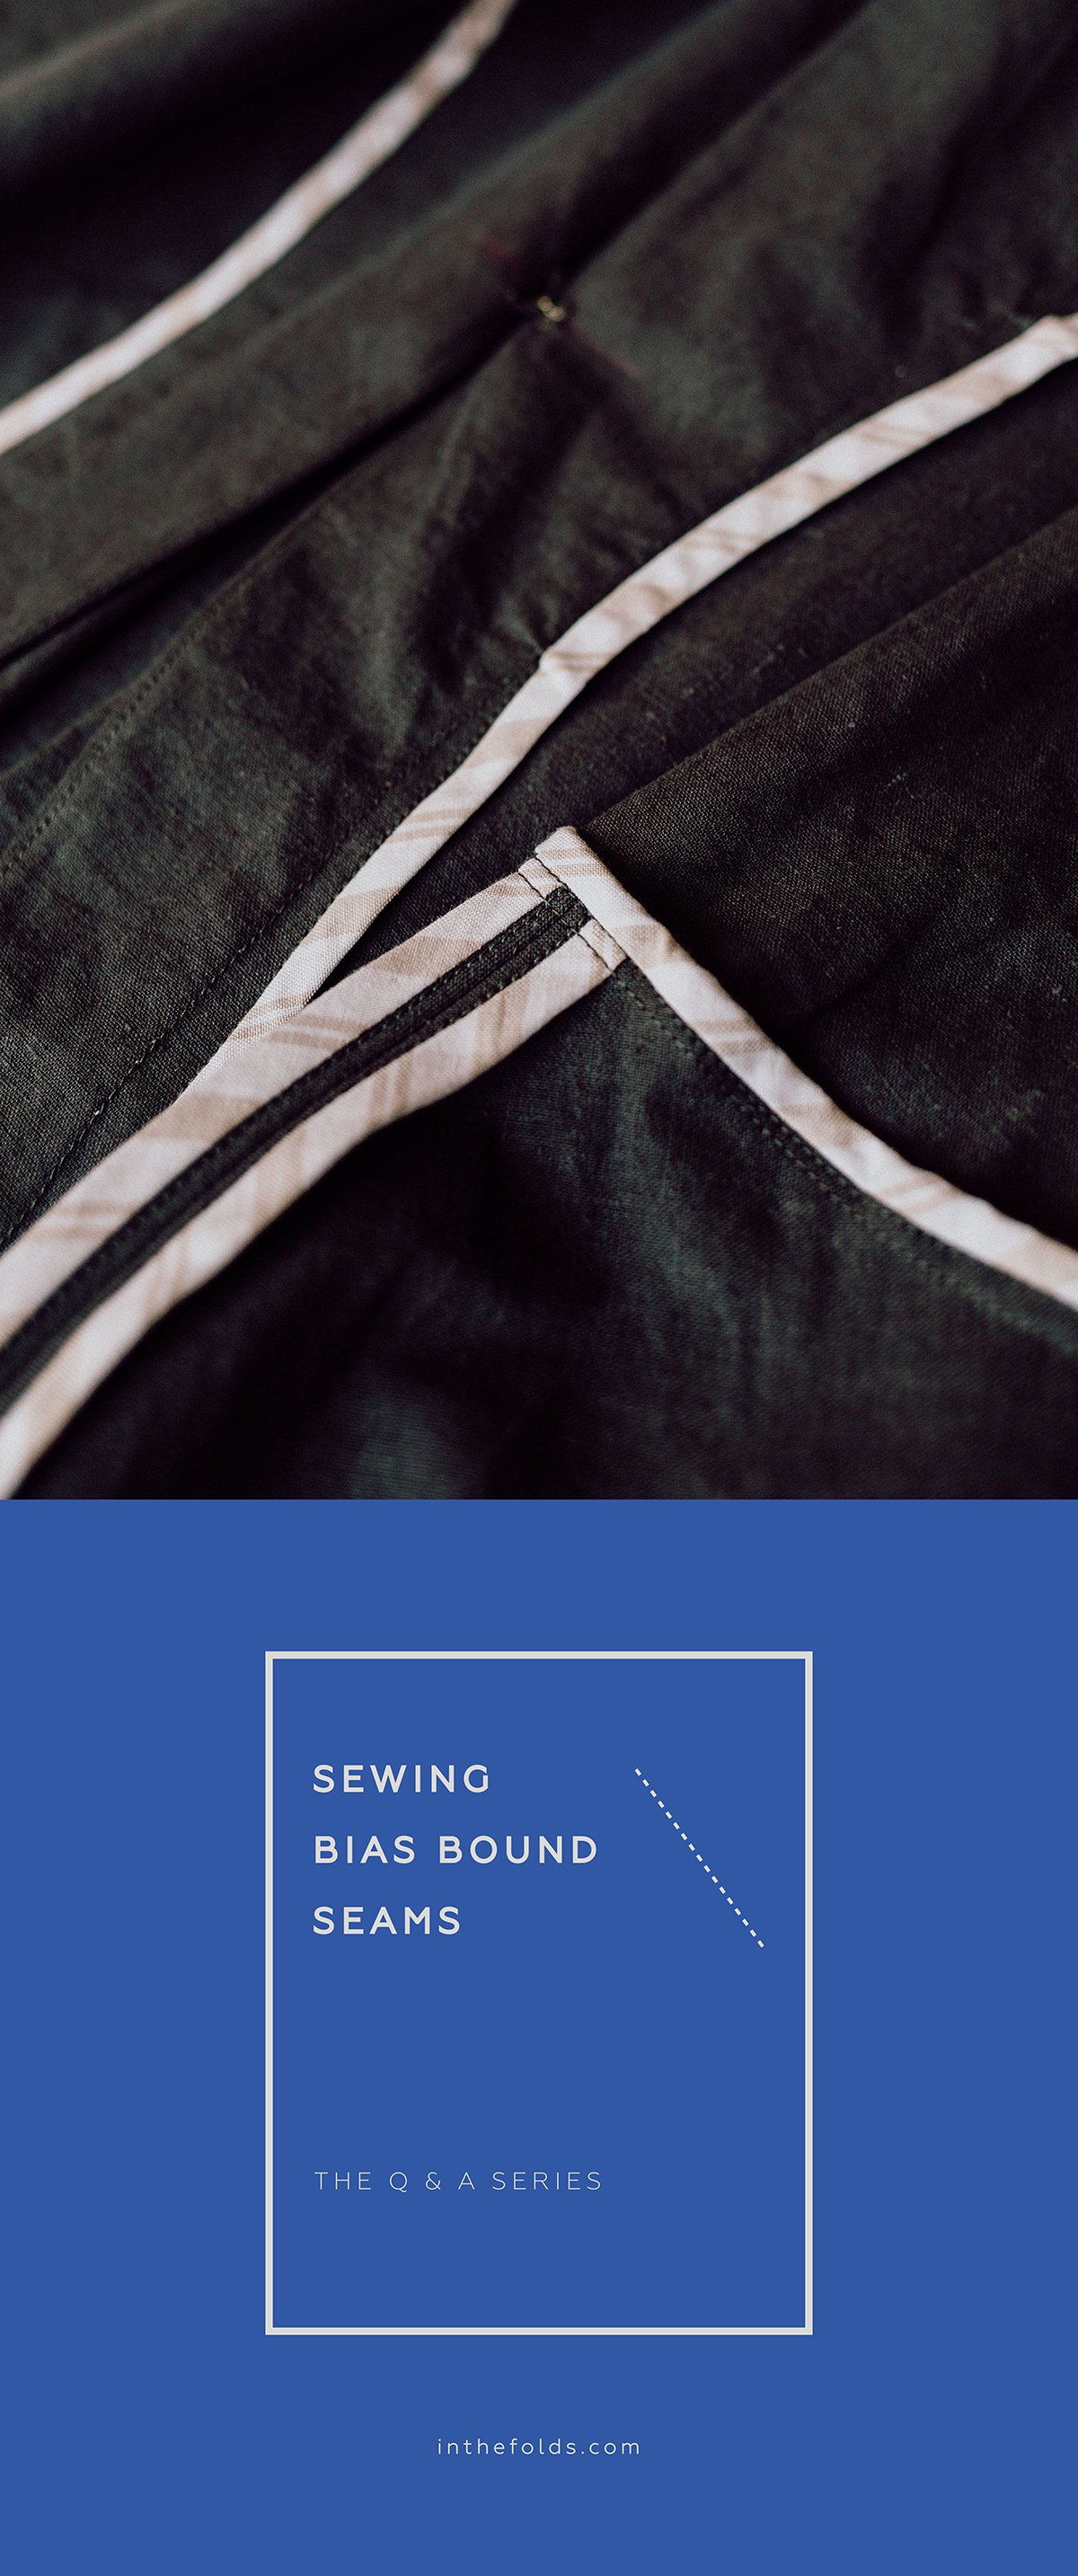 How To Sew Hong Kong And Bias Bound Seams